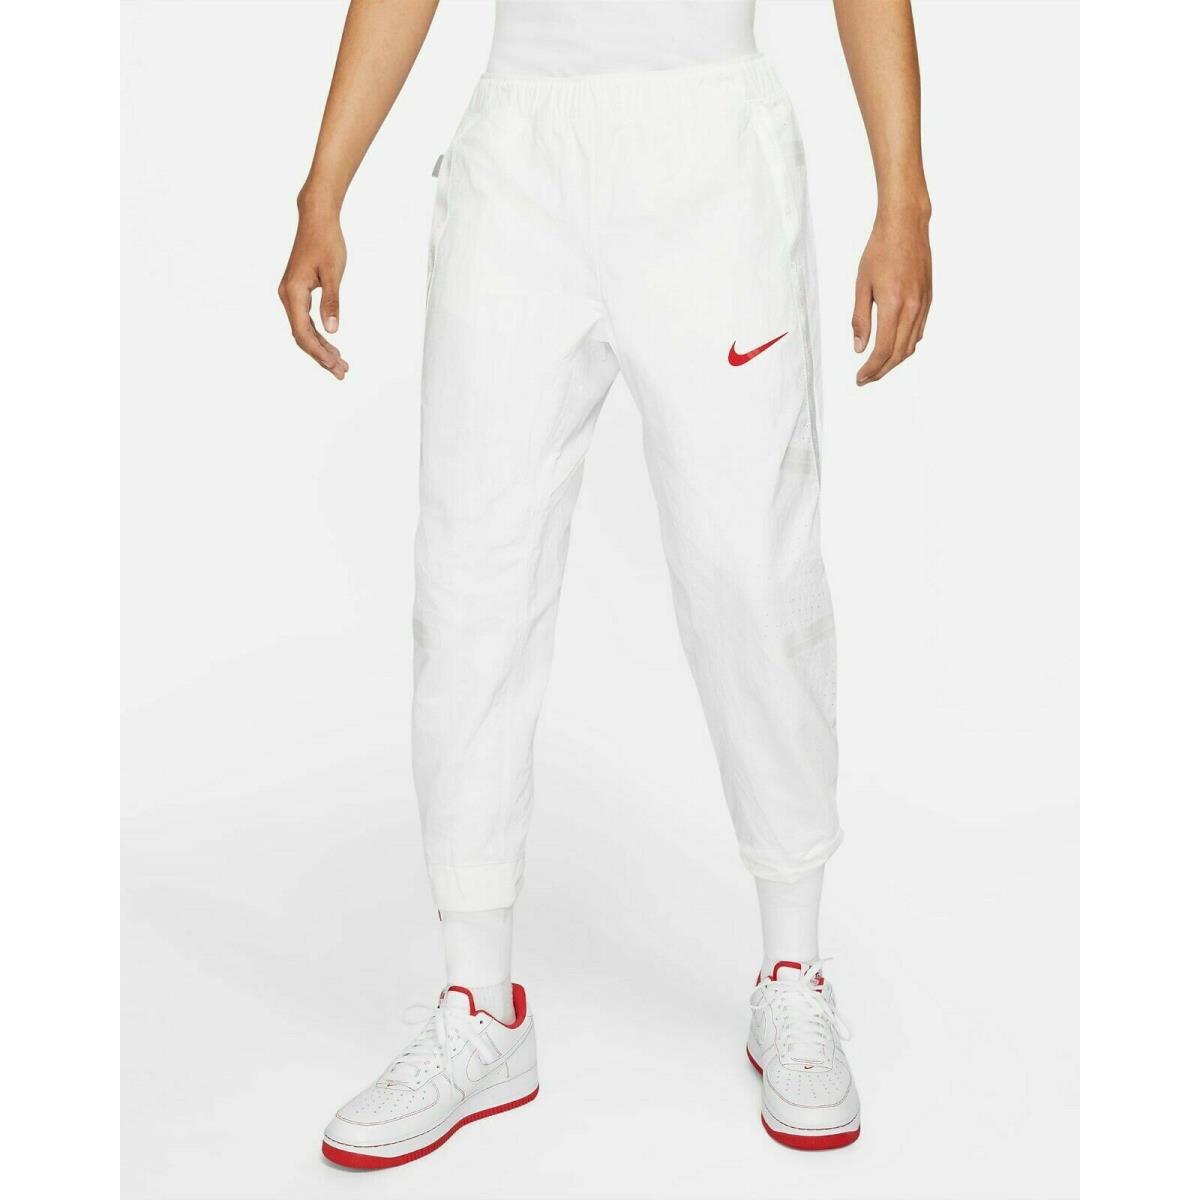 Nike Team Usa Olympics Medal Stand Pants White CK4559-100 Mens Size S-M-L-xl-2xl